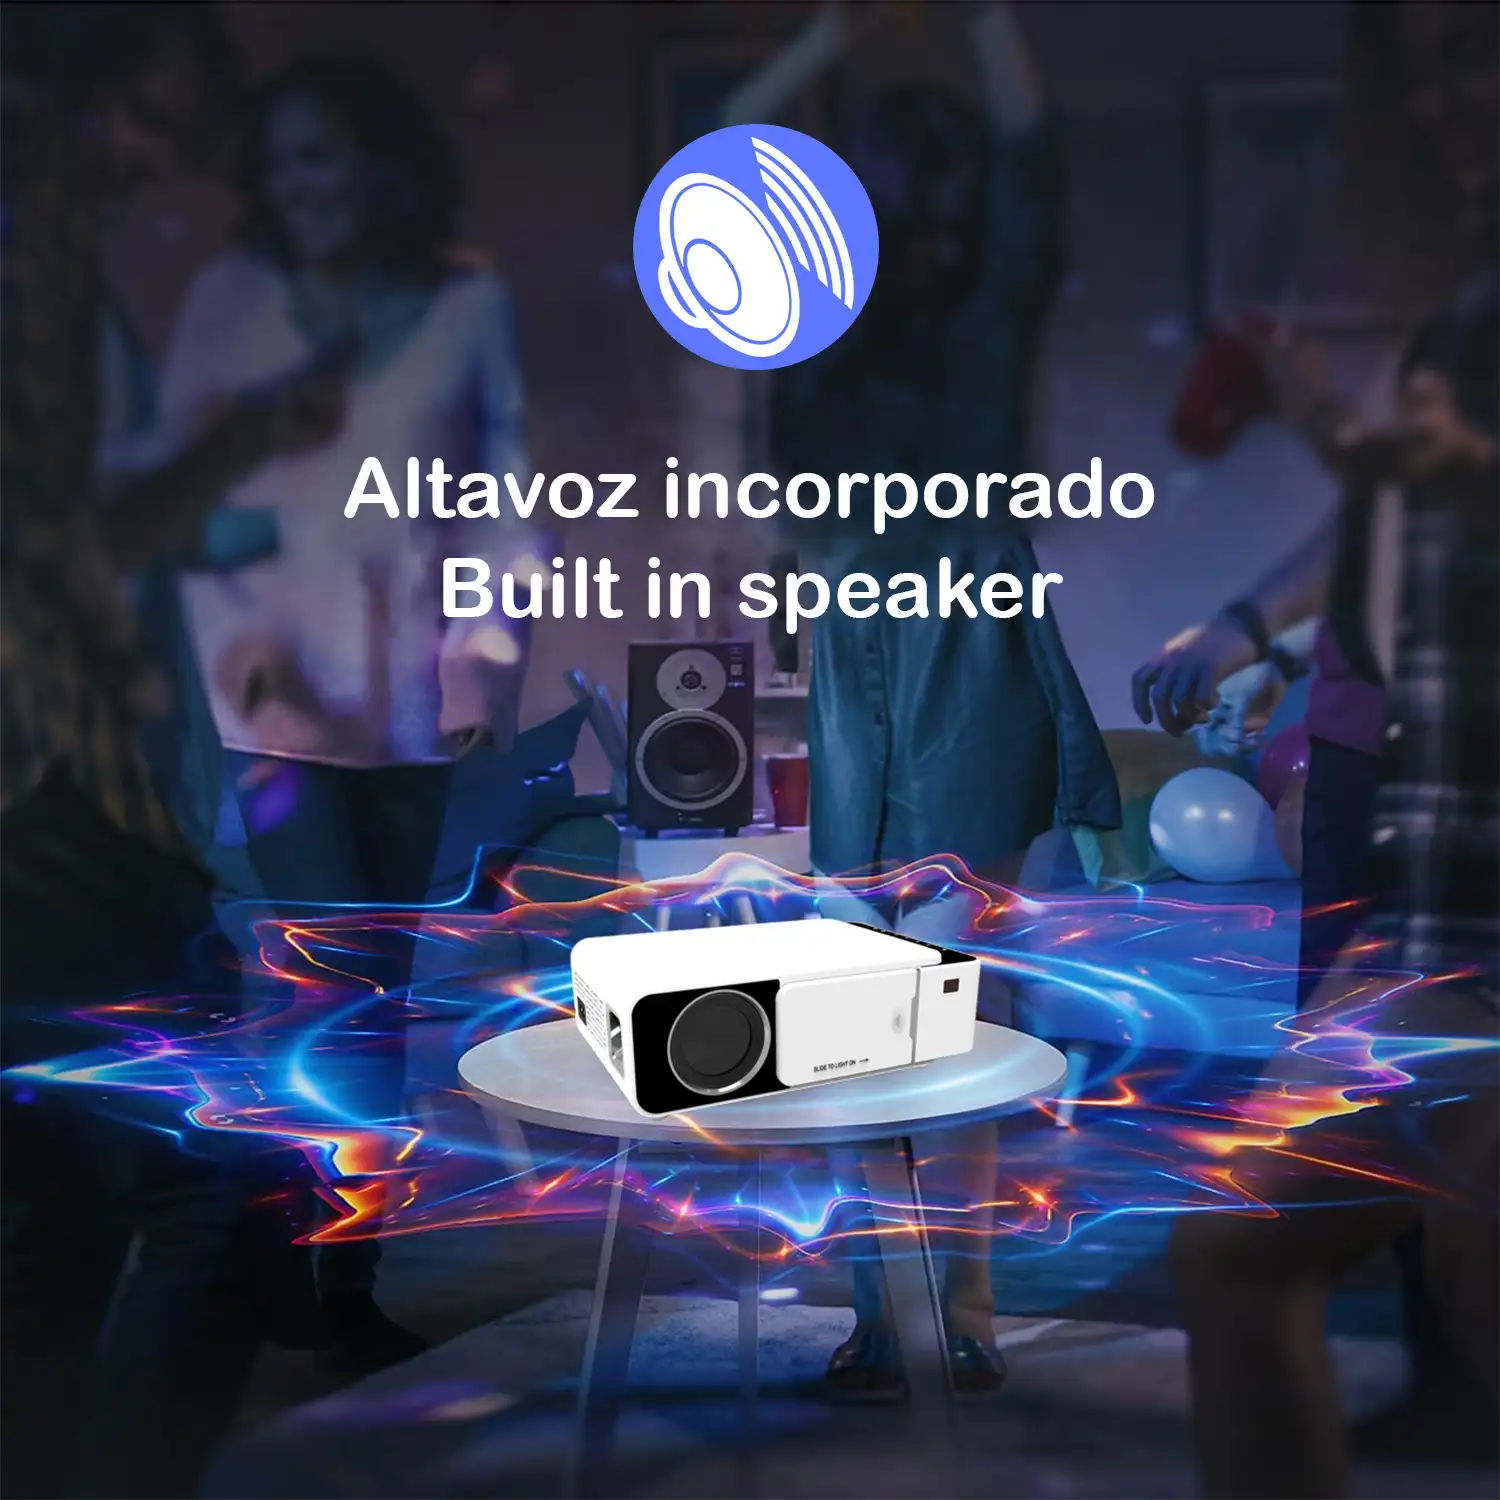 Video proyector LED T500 Wifi, con Airplay y Miracast. Soporta Full HD1080, 30 a 170 pulgadas, altavoz y mando.